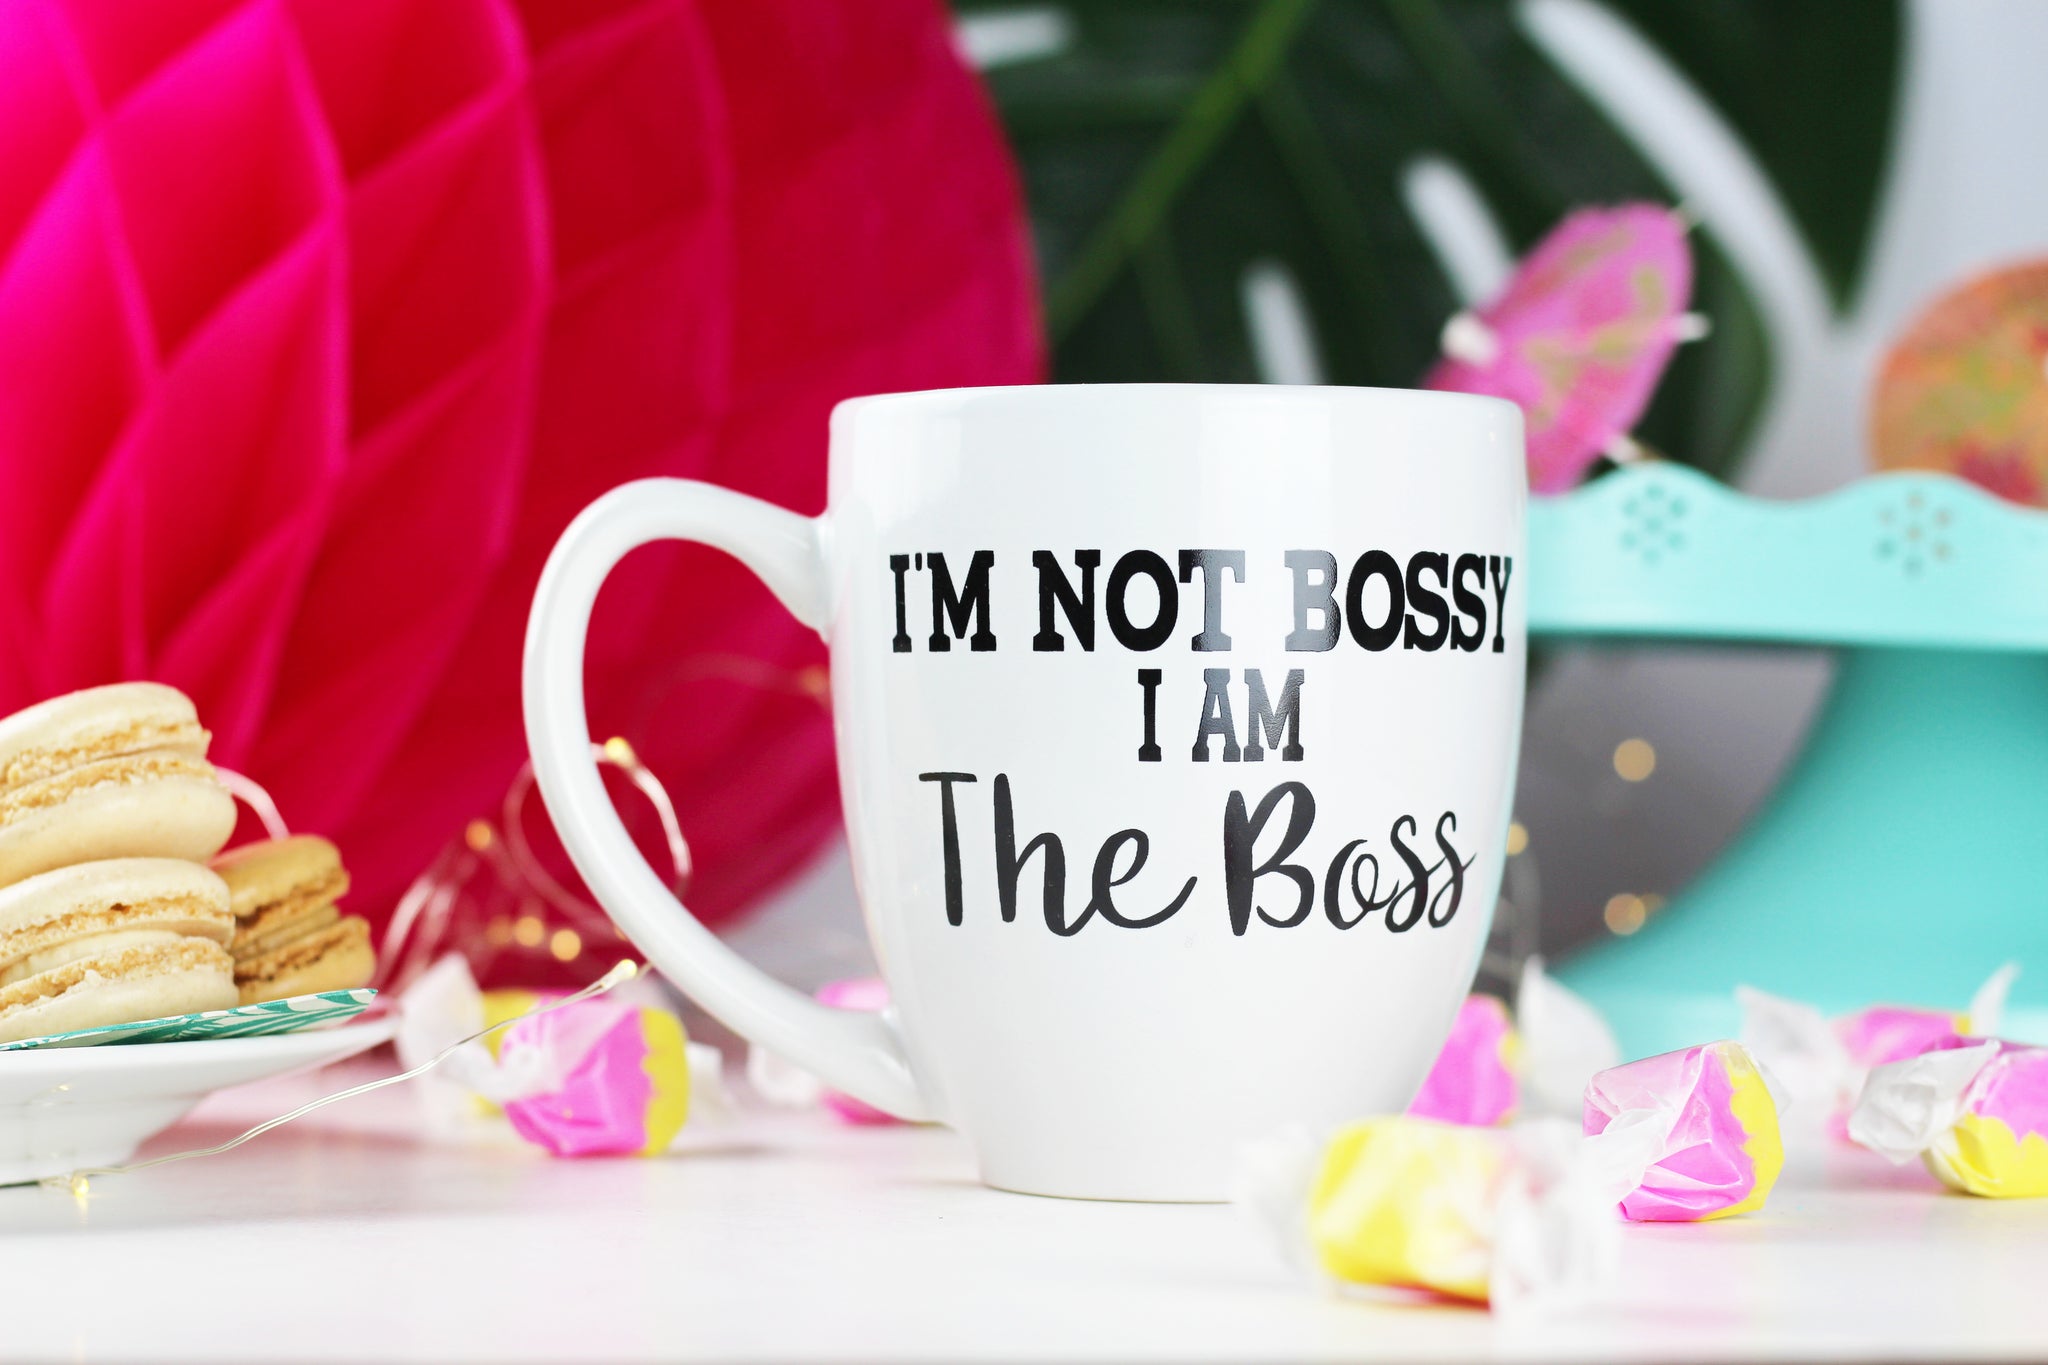 I'm not bossy, I am the boss